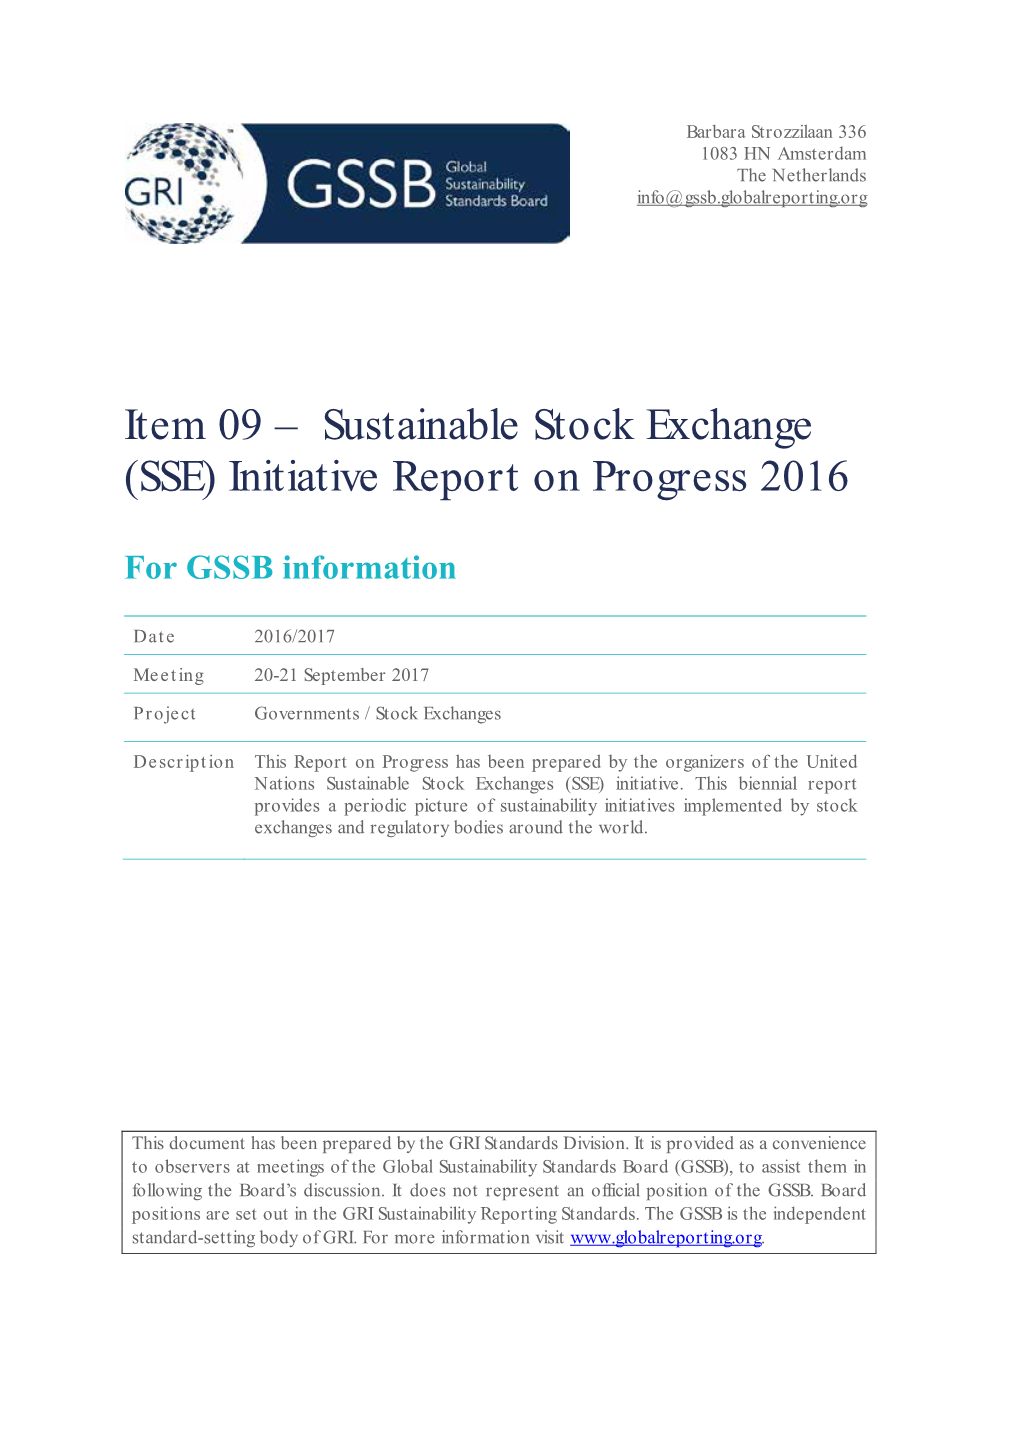 Sustainable Stock Exchange (SSE) Initiative Report on Progress 2016